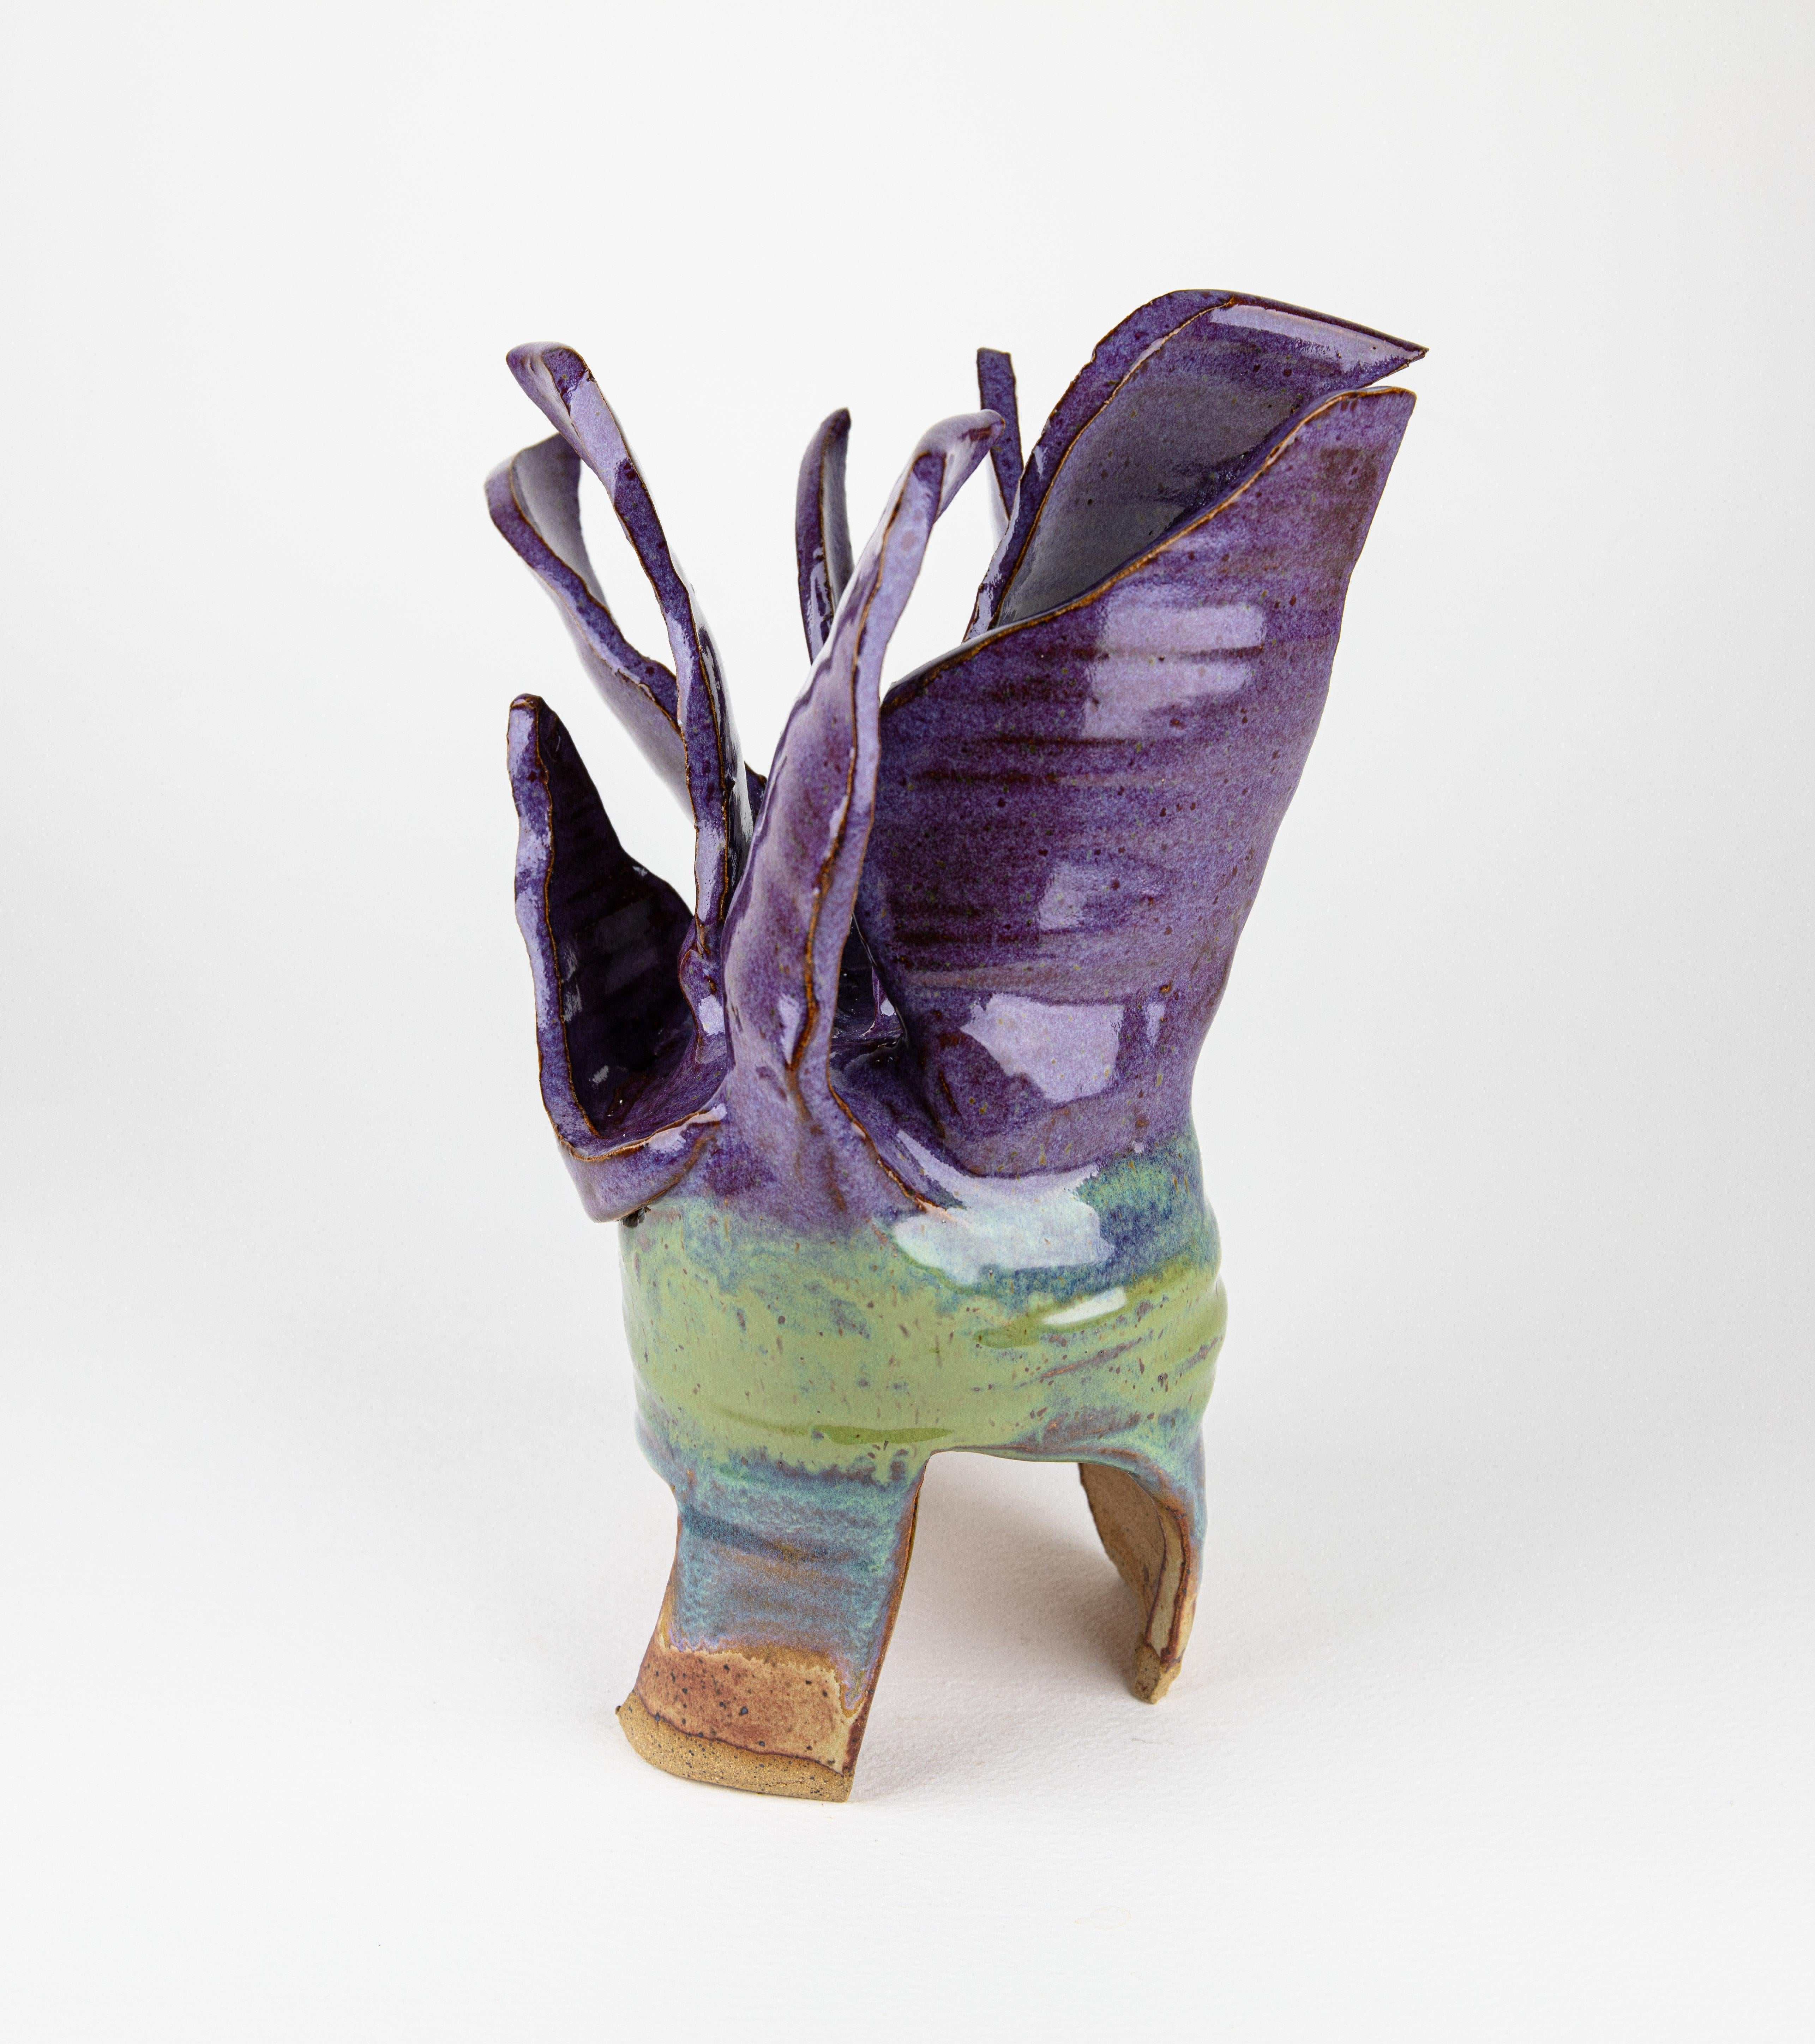 Blossom 1, Abstract ceramic sculpture, purple and green flower - Sculpture by Rachelle Krieger